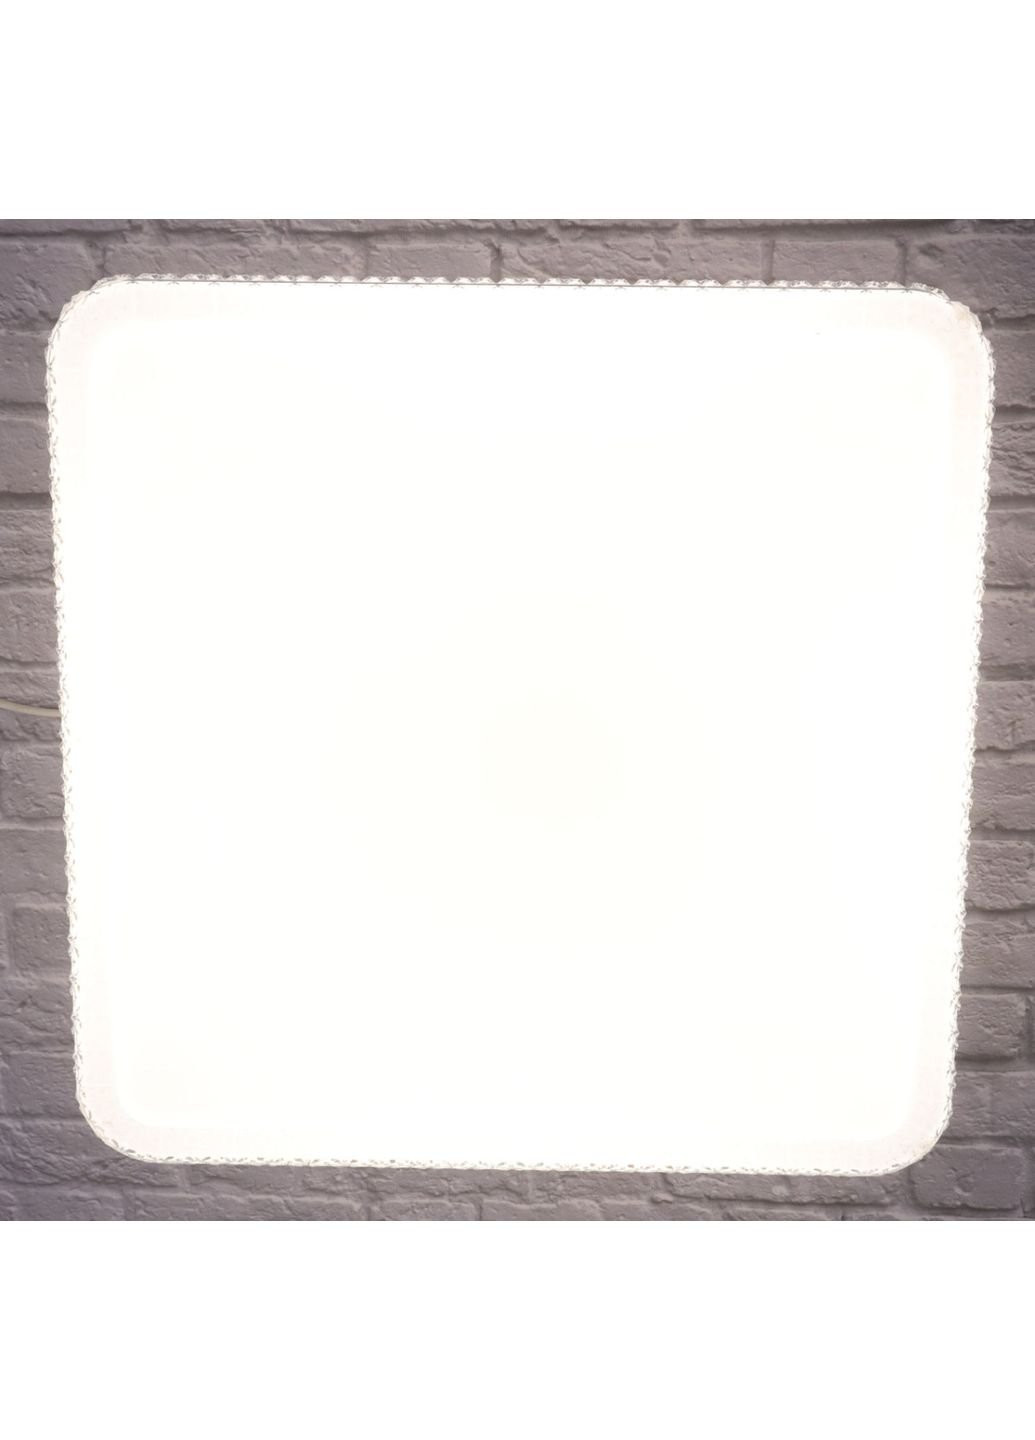 Светильник потолочный LED с пультом W71139B/500*500 Белый 5х53х53 см. Sunnysky (253544762)